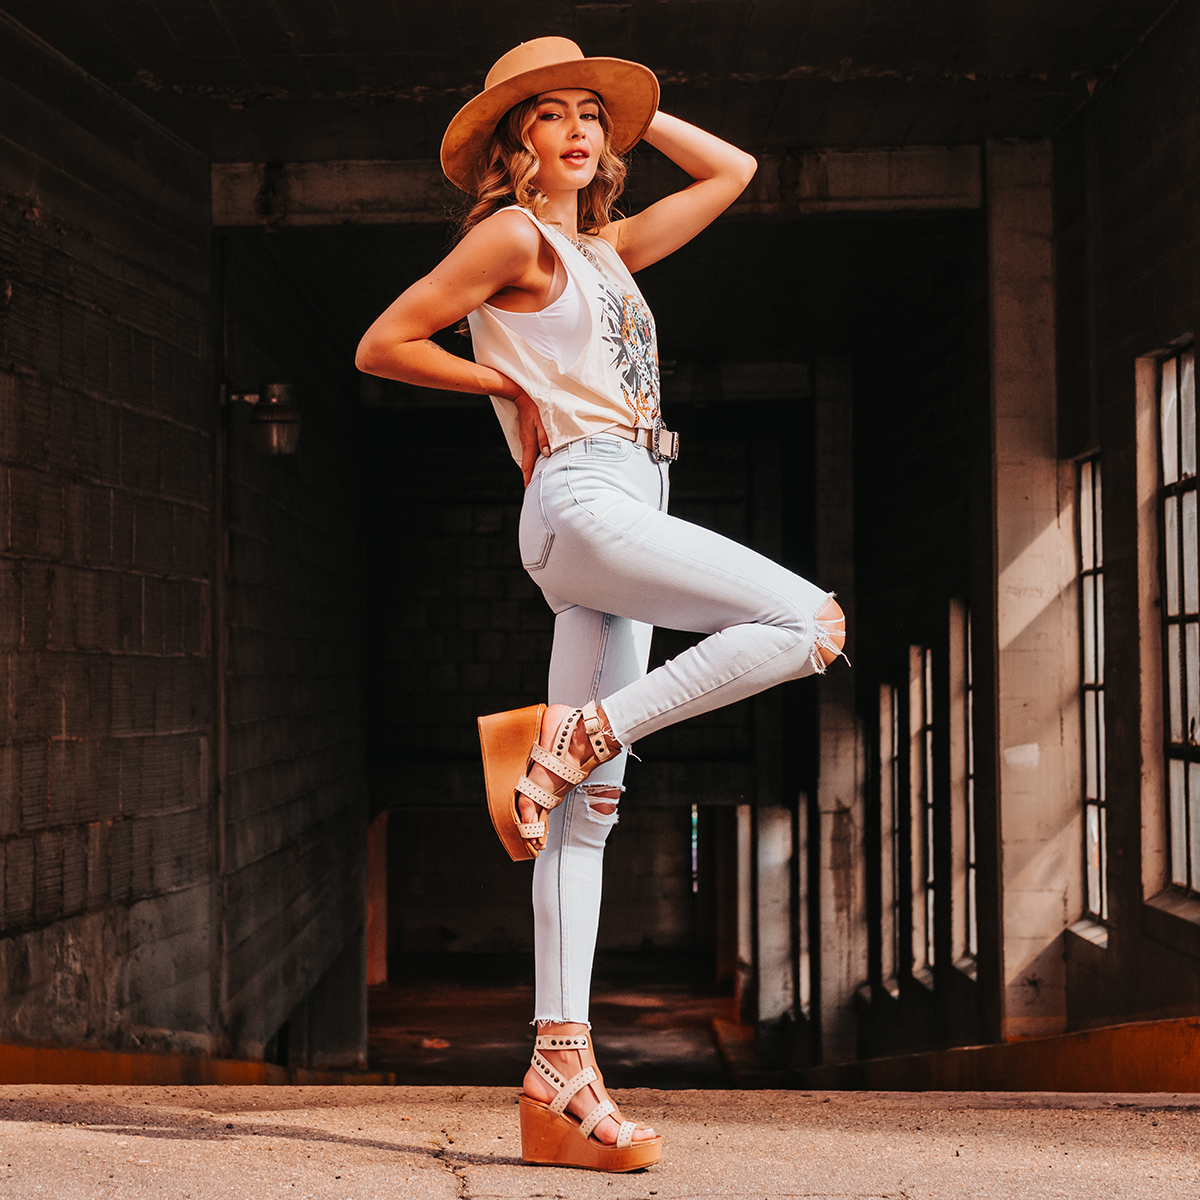 FREEBIRD women's Winter beige multi wedge heel platform sandal featuring an adjustable ankle strap and stud detailing lifestyle